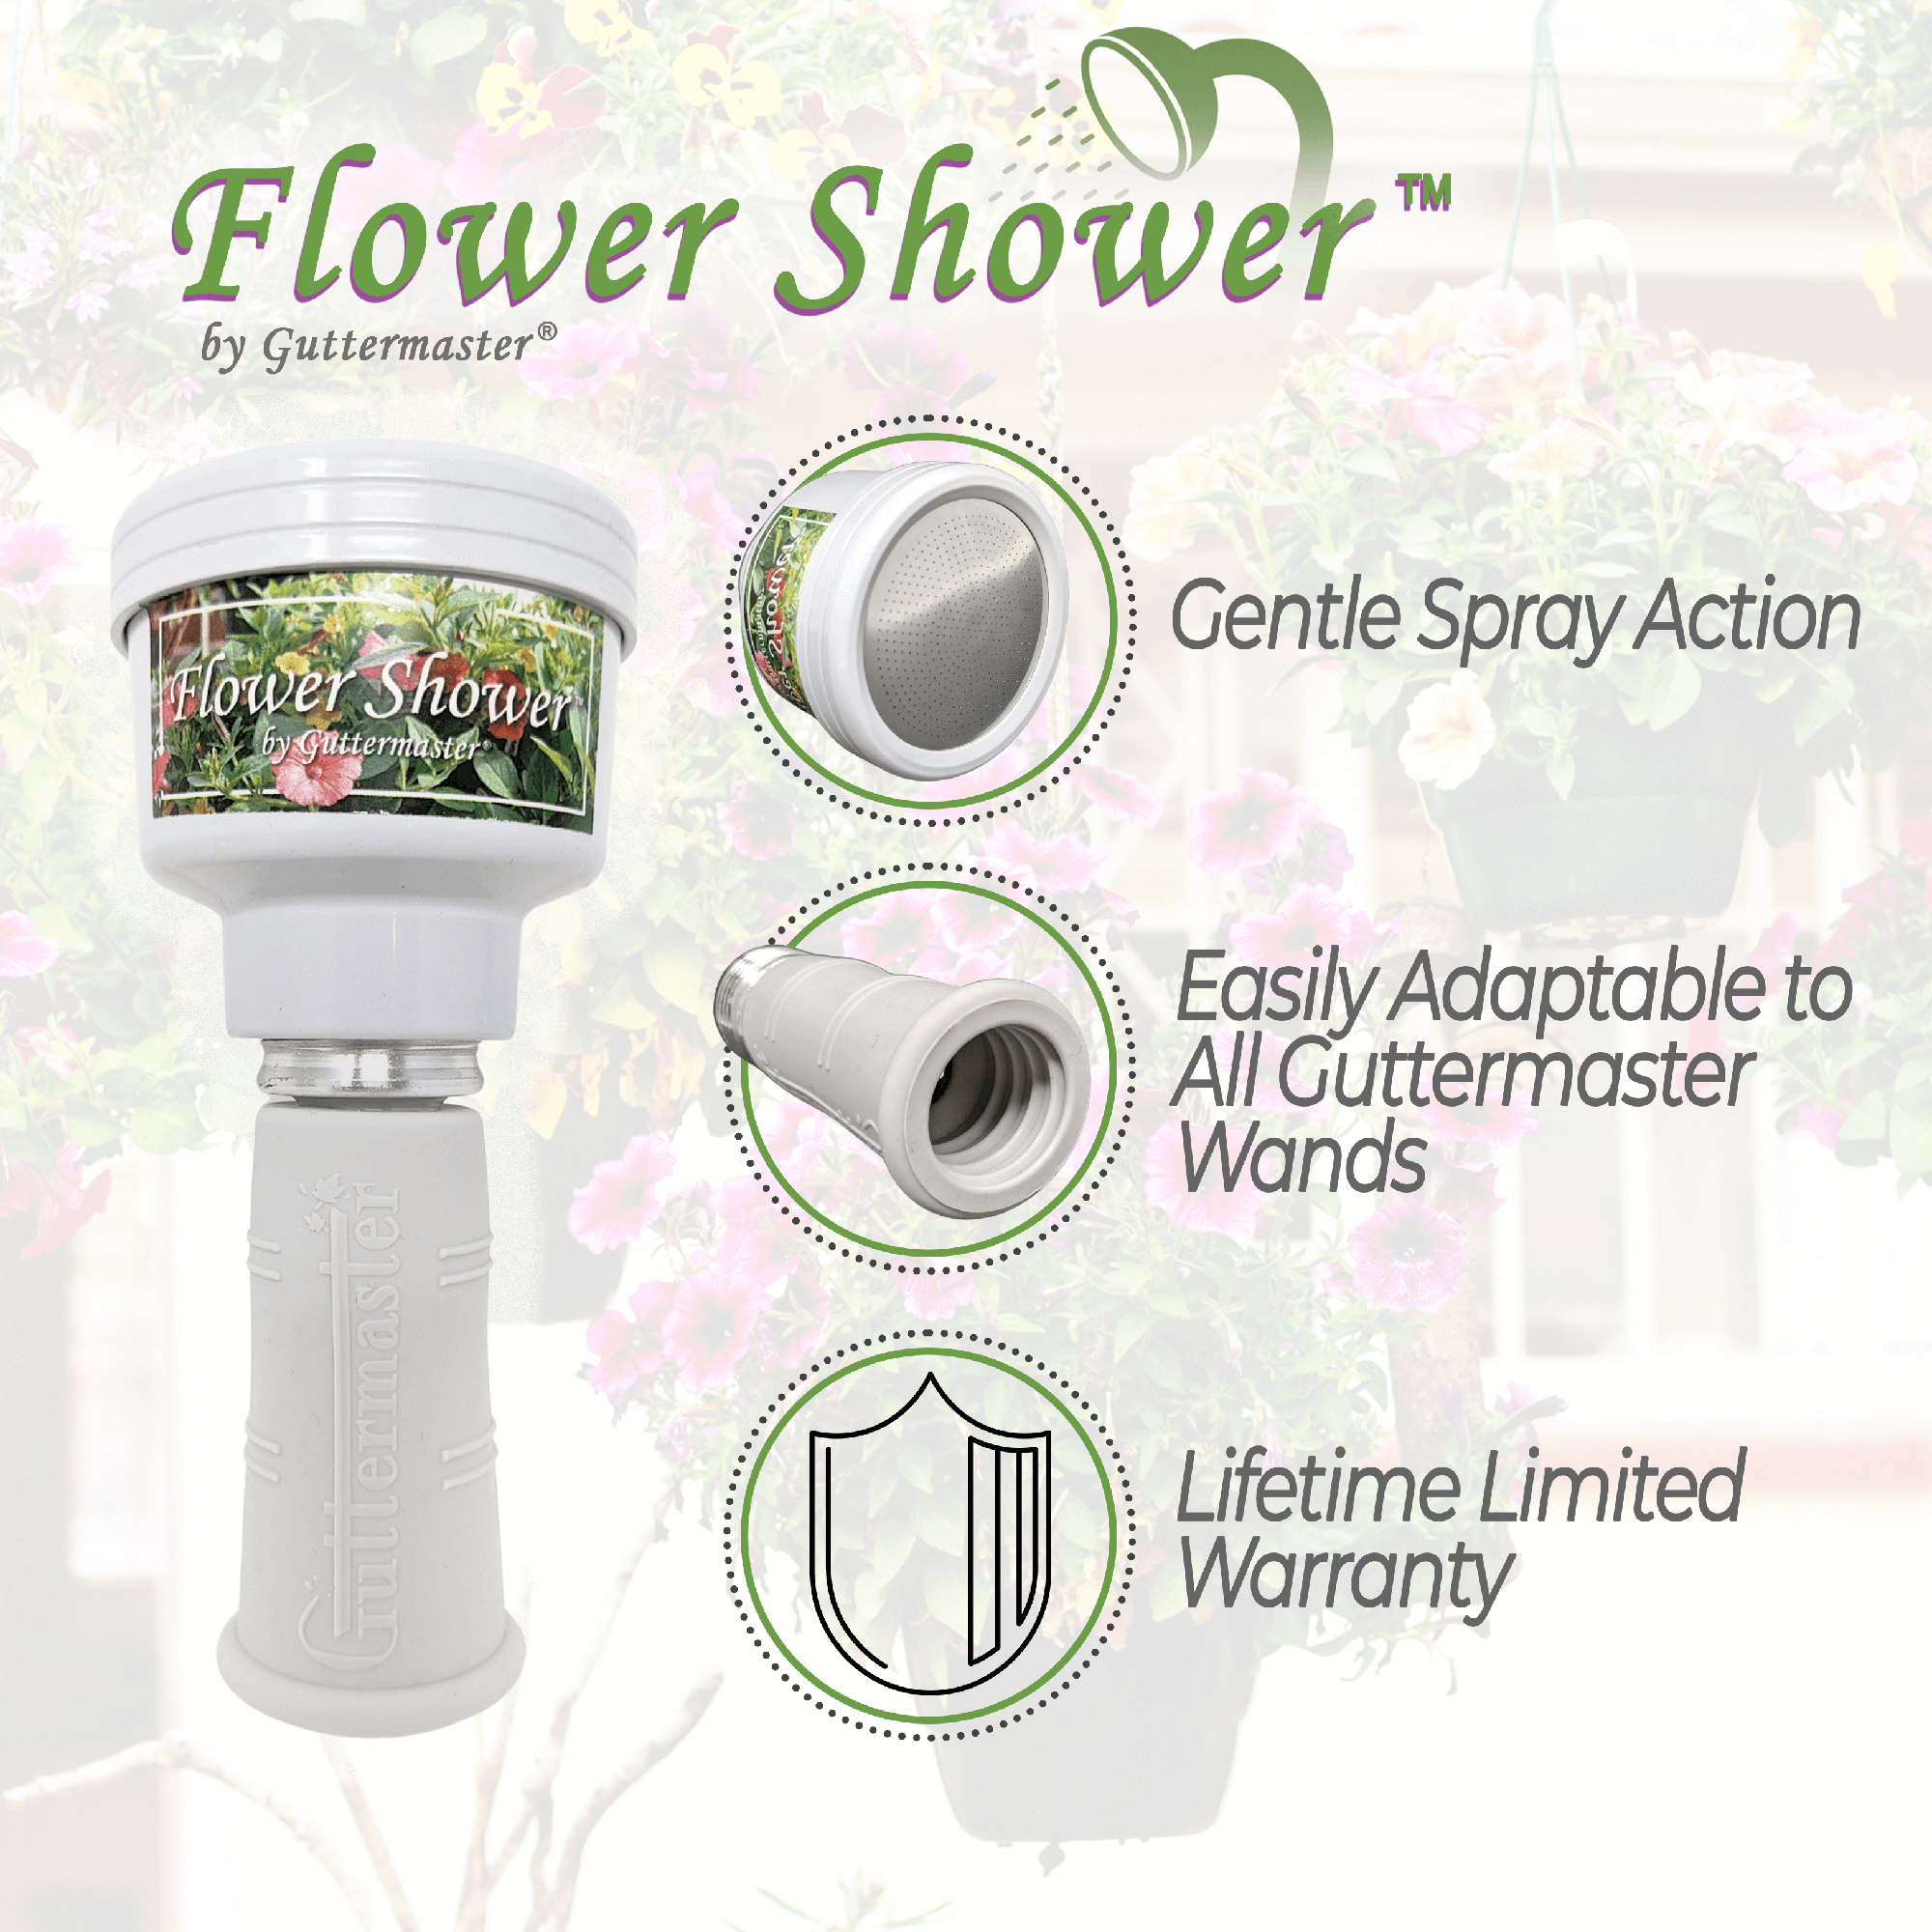 Flower Shower Infographic